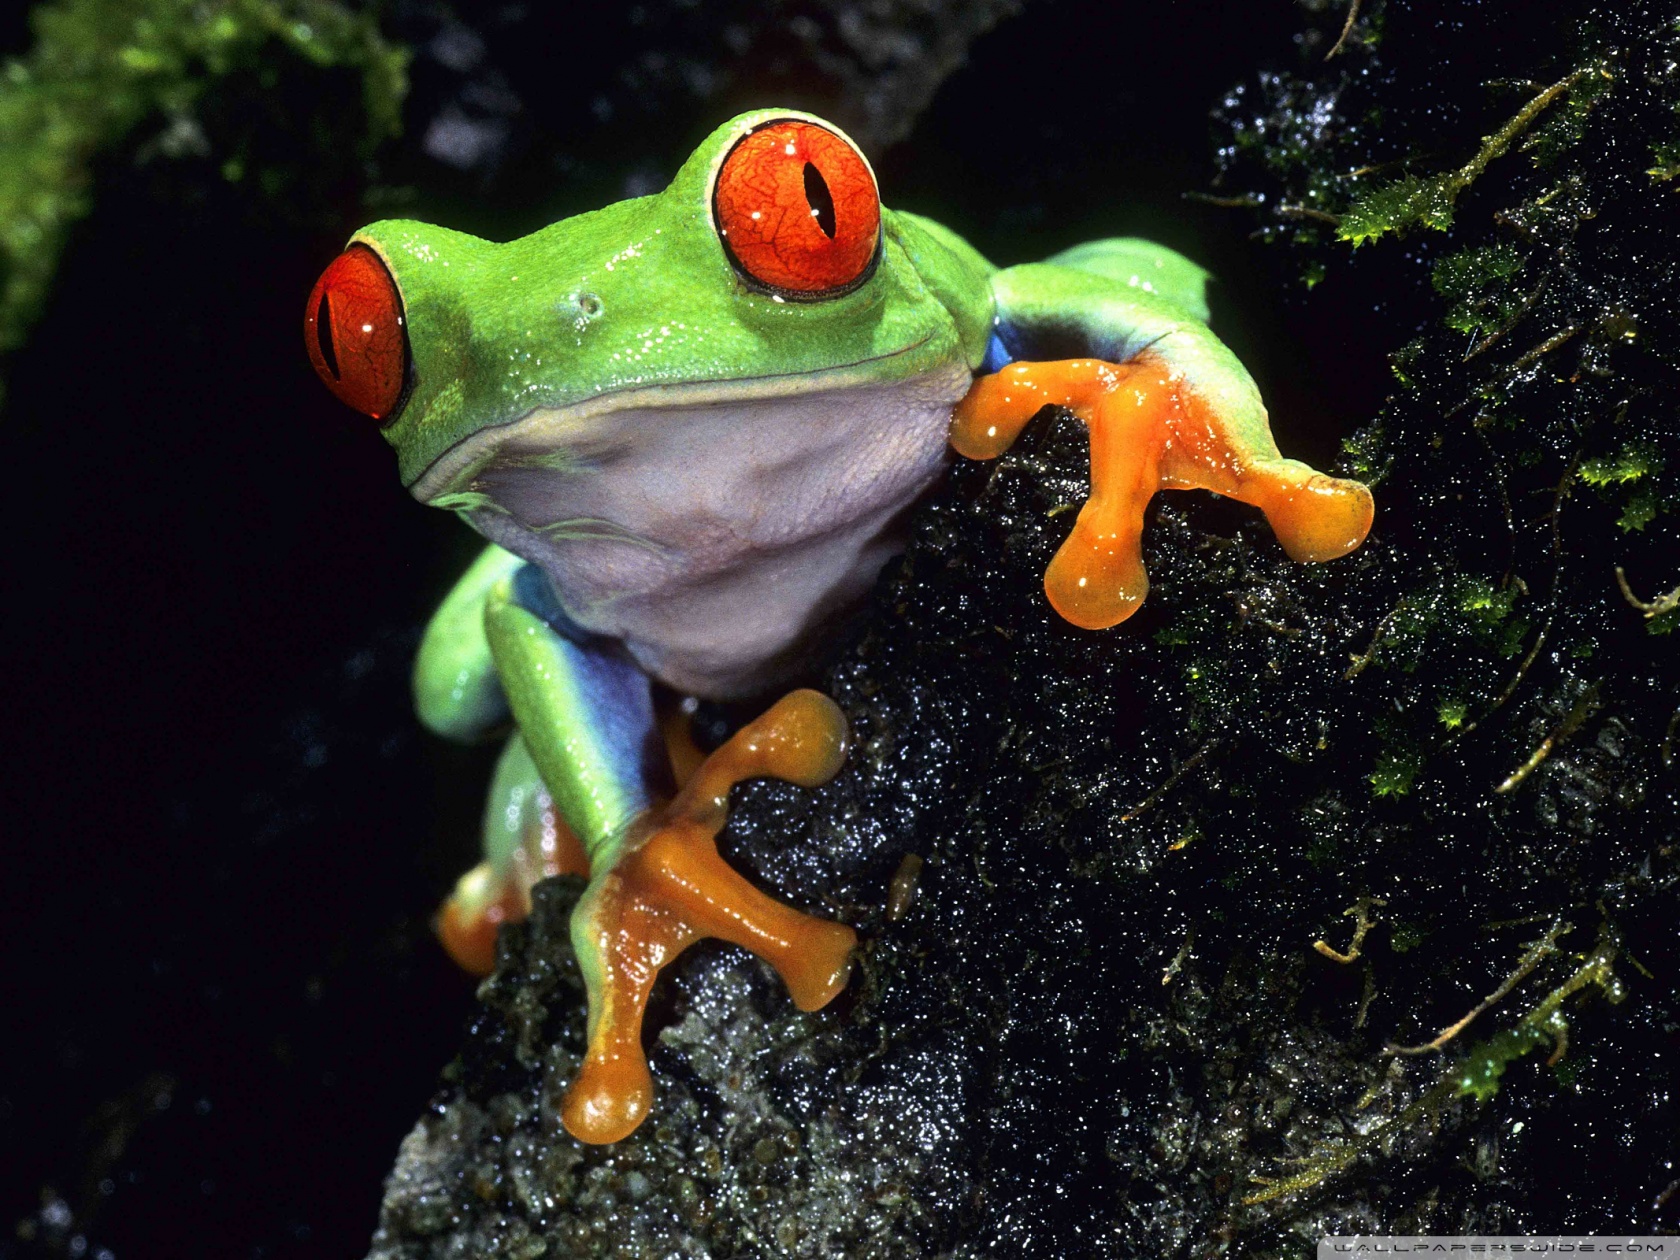 Red Eyed Tree Frog Ultra HD Desktop Background Wallpaper for 4K UHD TV, Tablet